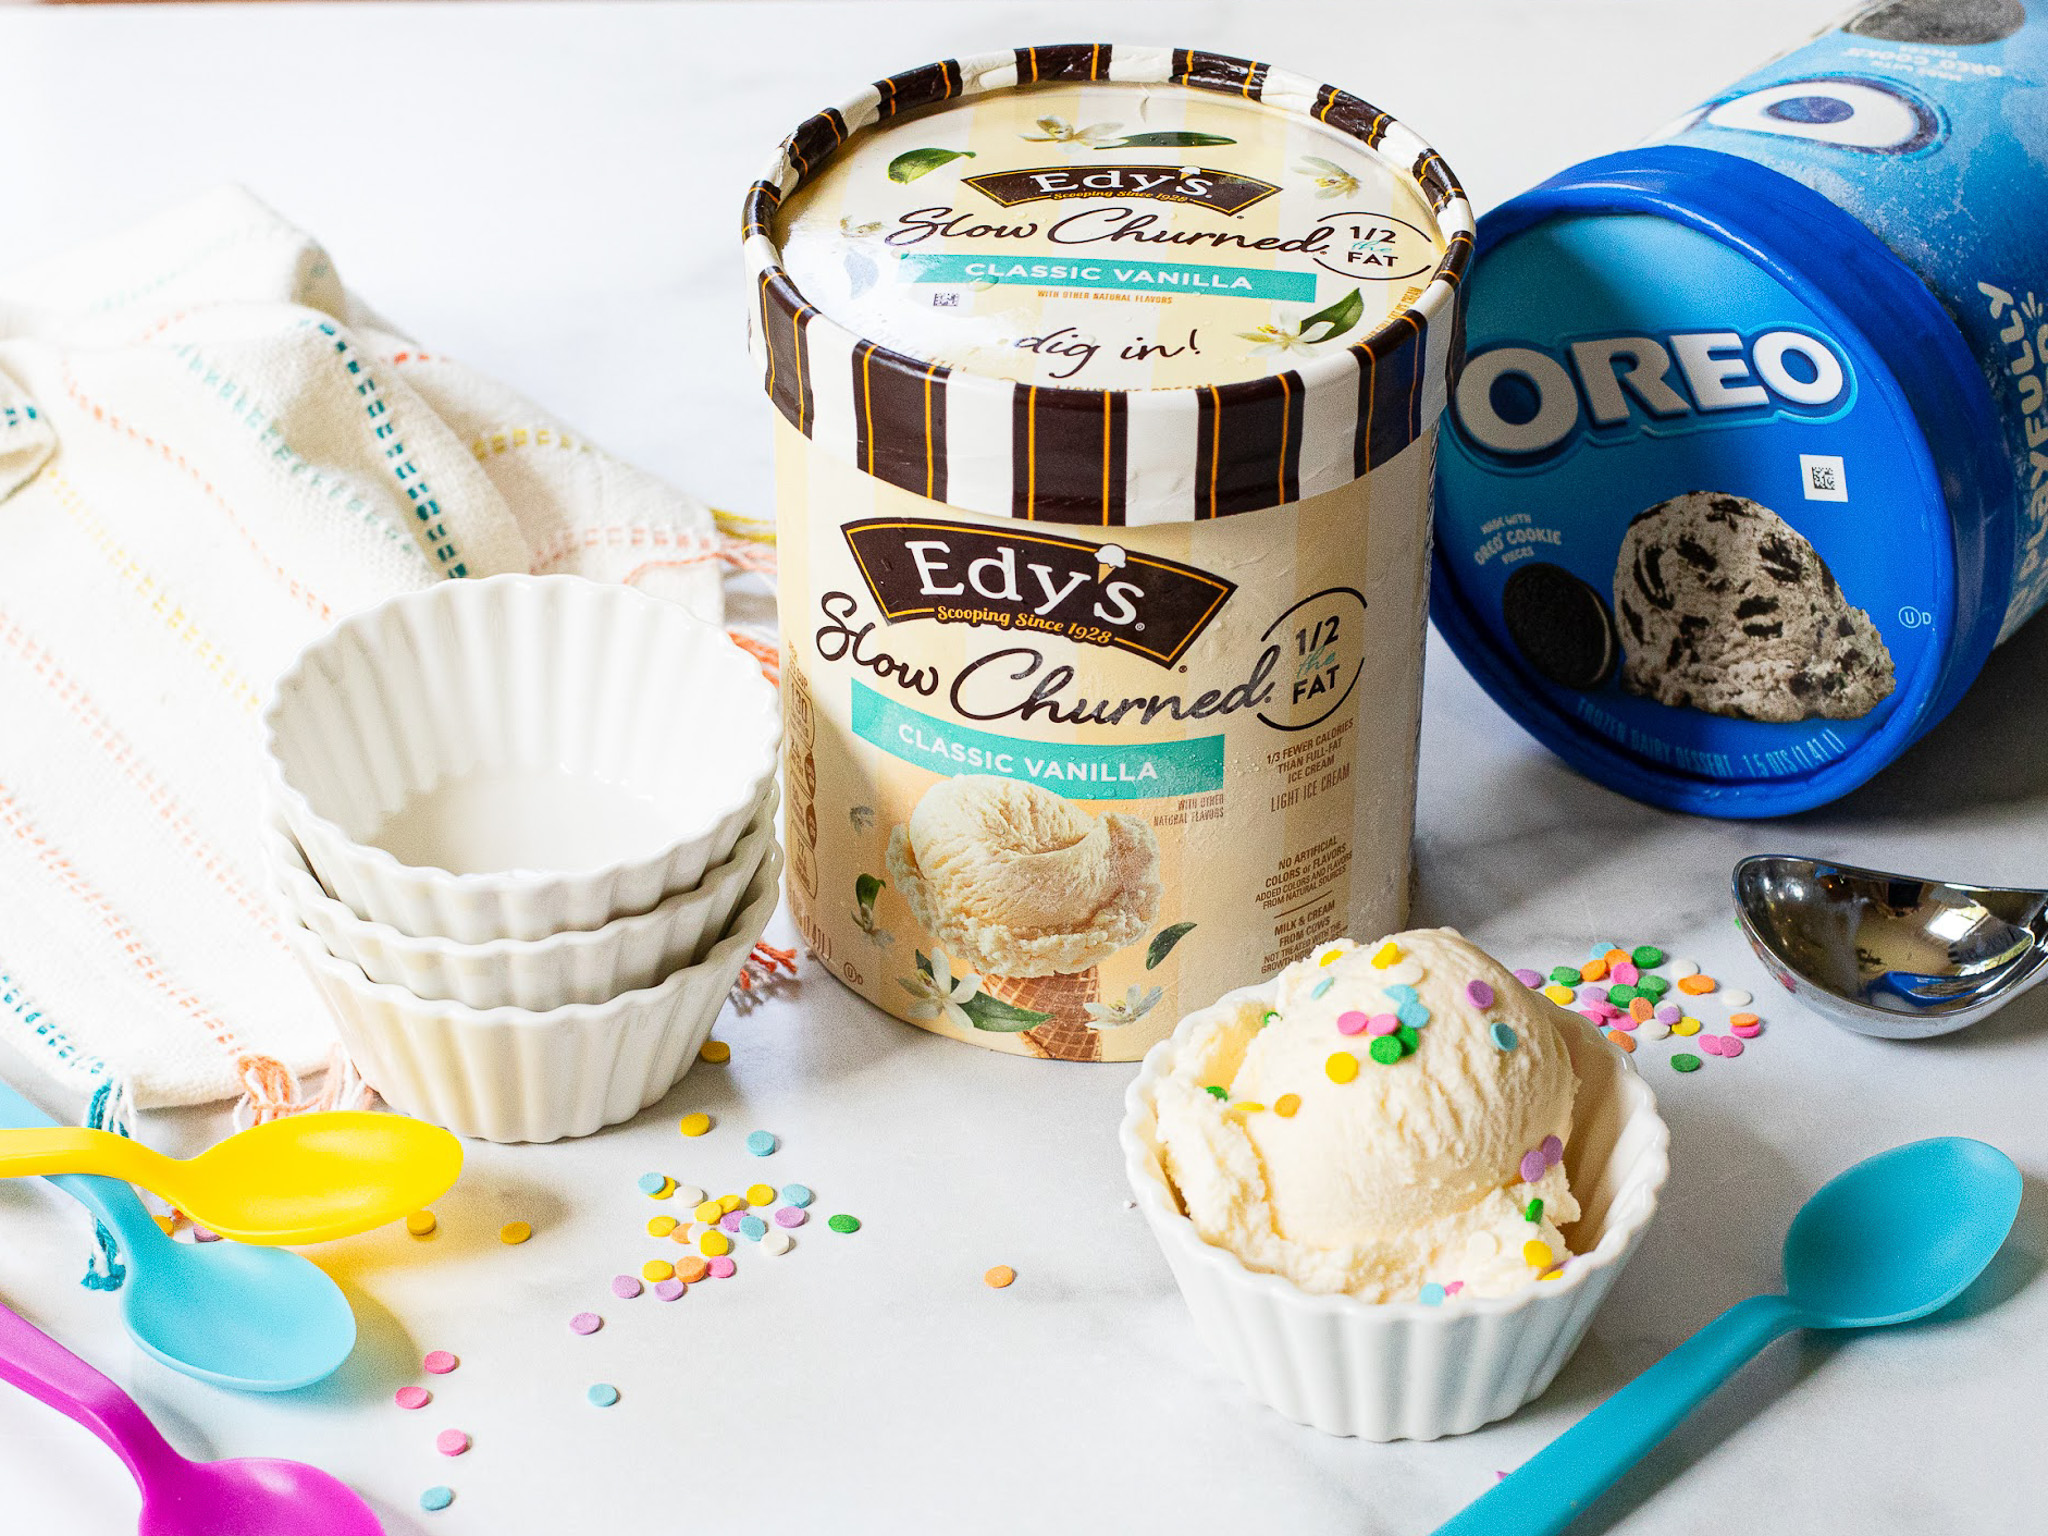 Official Edy's® Ice Cream